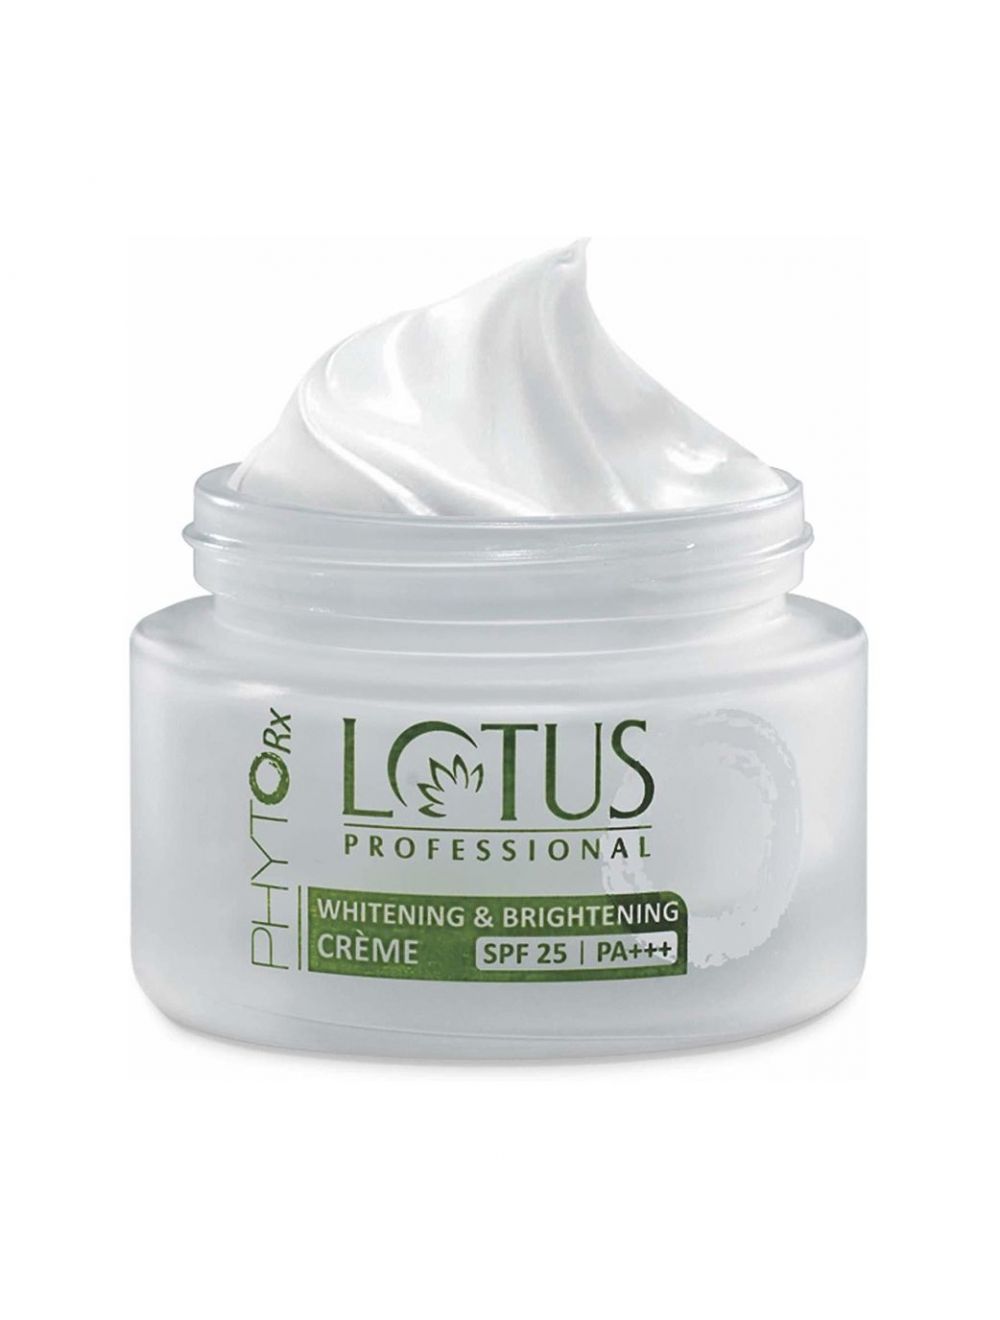 Lotus Professional PhytoRx Whitening & Brightening Cream Spf 25 PA+++ (50gm)